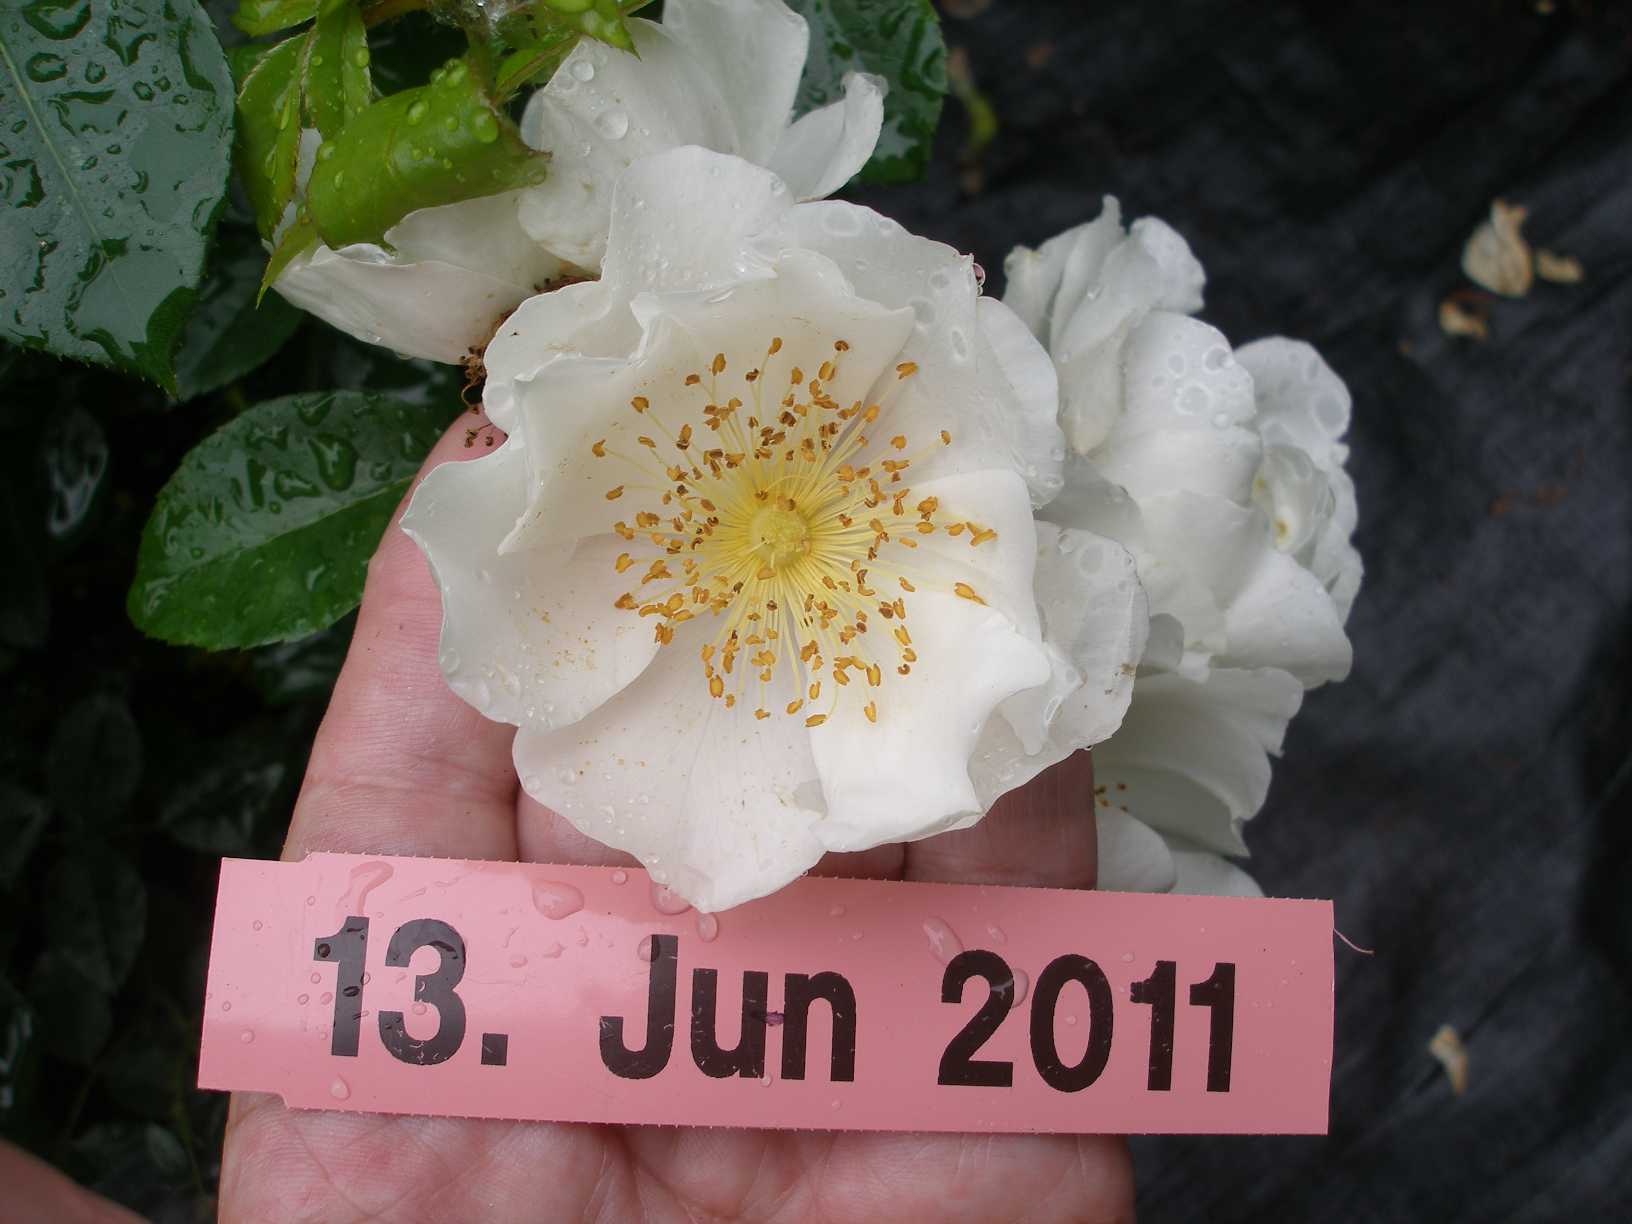 Scottish Roses grown and sold in Albany County, NY. by Azalea